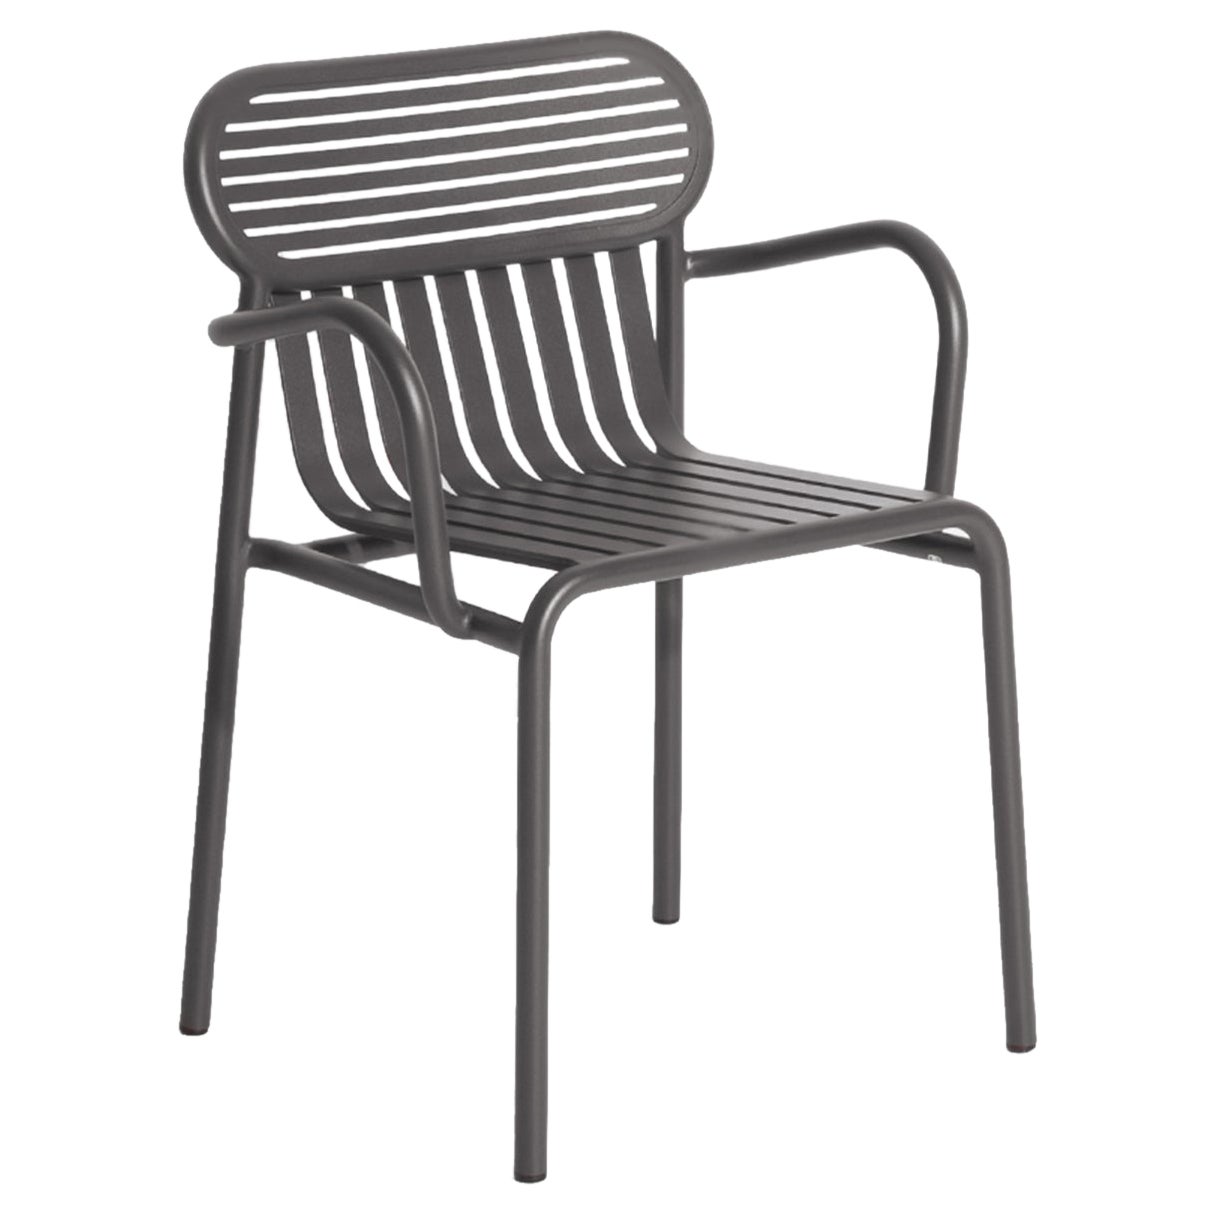 Petite Friture Week-End Bridge Chair in Anthracite Aluminium, 2017 For Sale